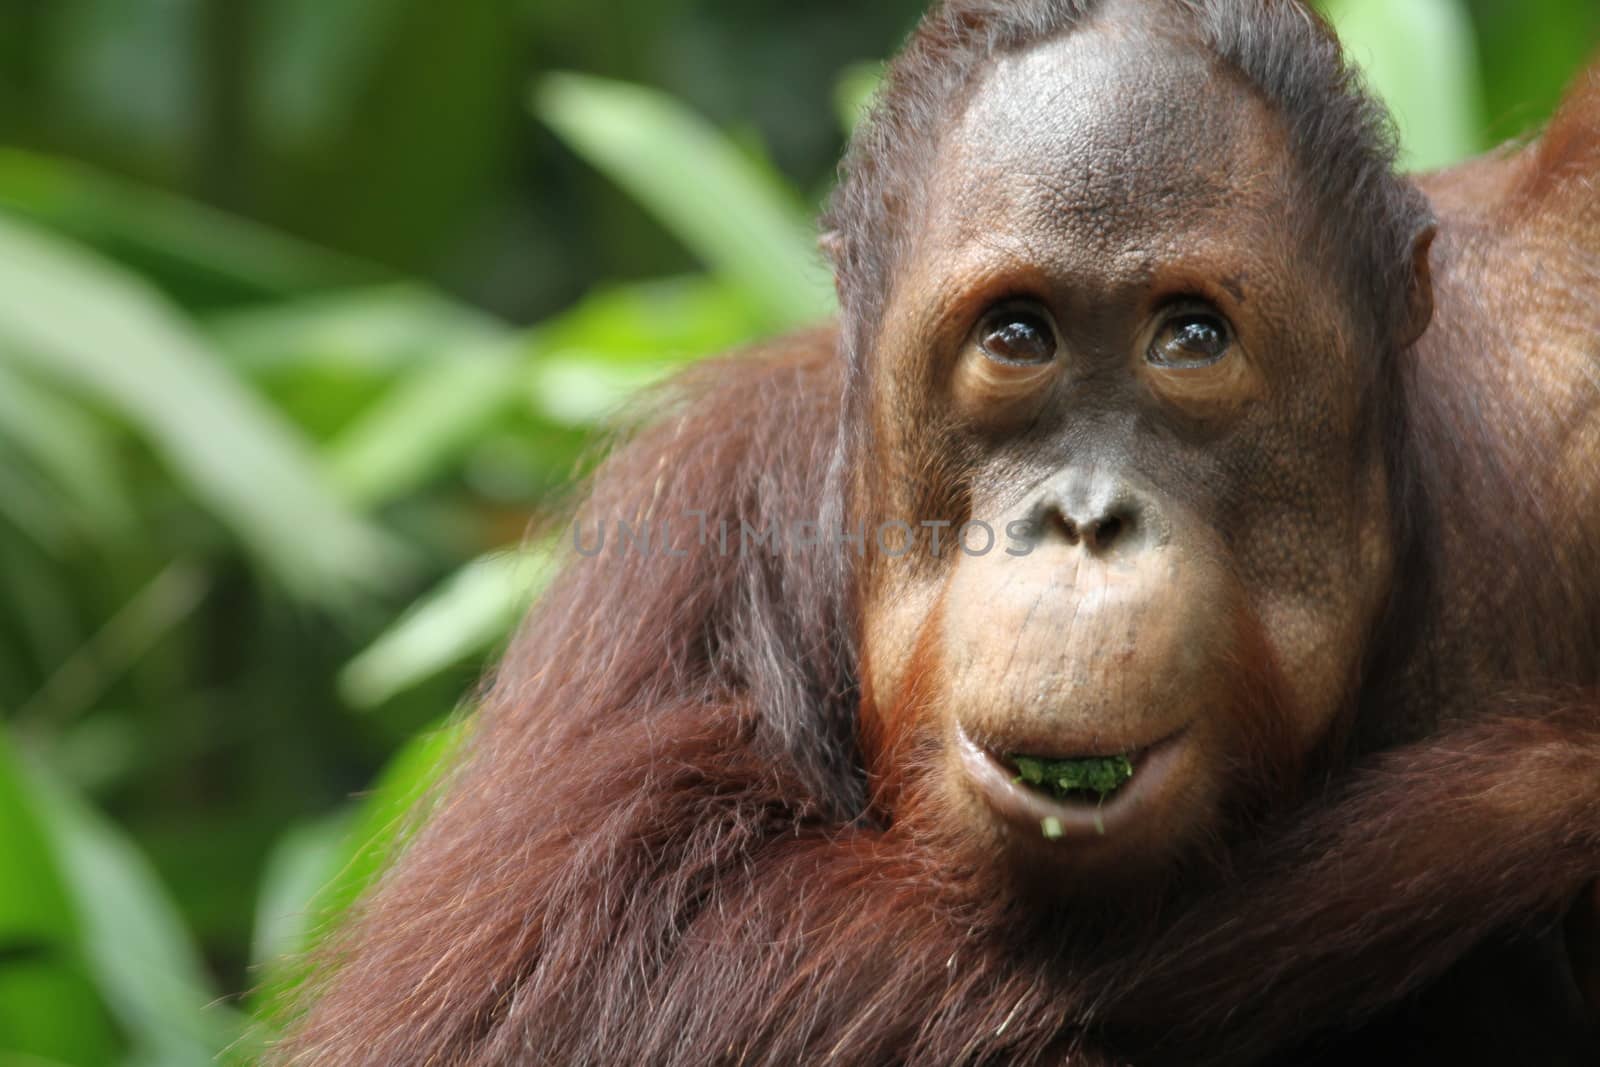 A wild life shot of orangutans in captivity